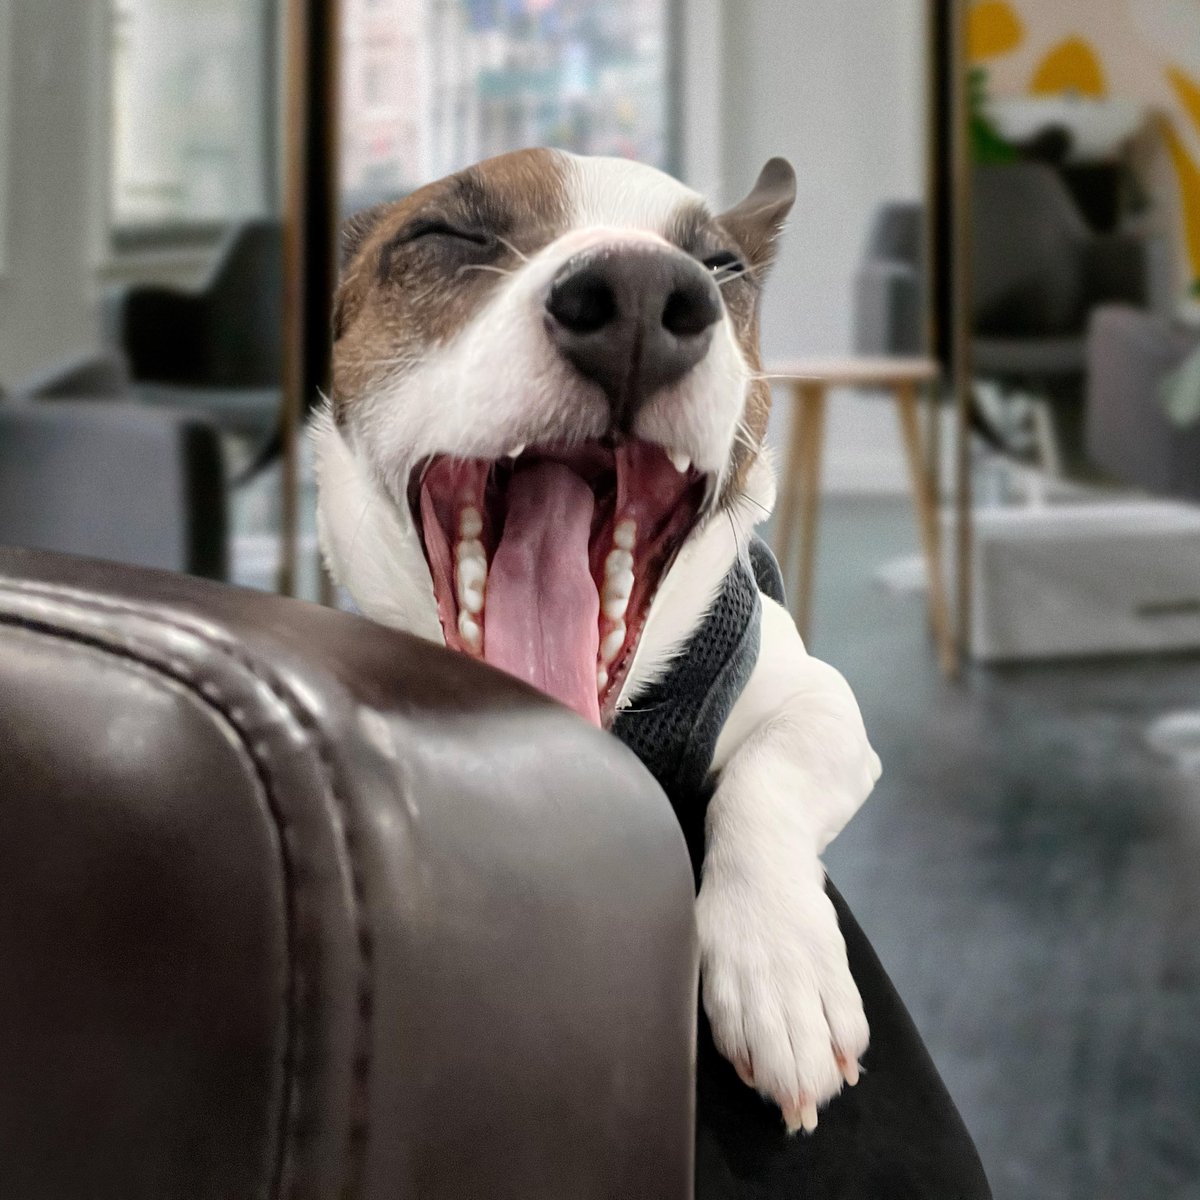 Astro would like to remind you to smile 😁

#dogfriendlynyc #dogsofnyc #jackrussellnation #nyc
#9gag #barked #animalsdoingthings #jrt #jackrusselldog #astro #dogs  #dog   #cute #cuteness #cutenessoverload #doggo #doglovers #doglove #doglife #happydog #dogphotography